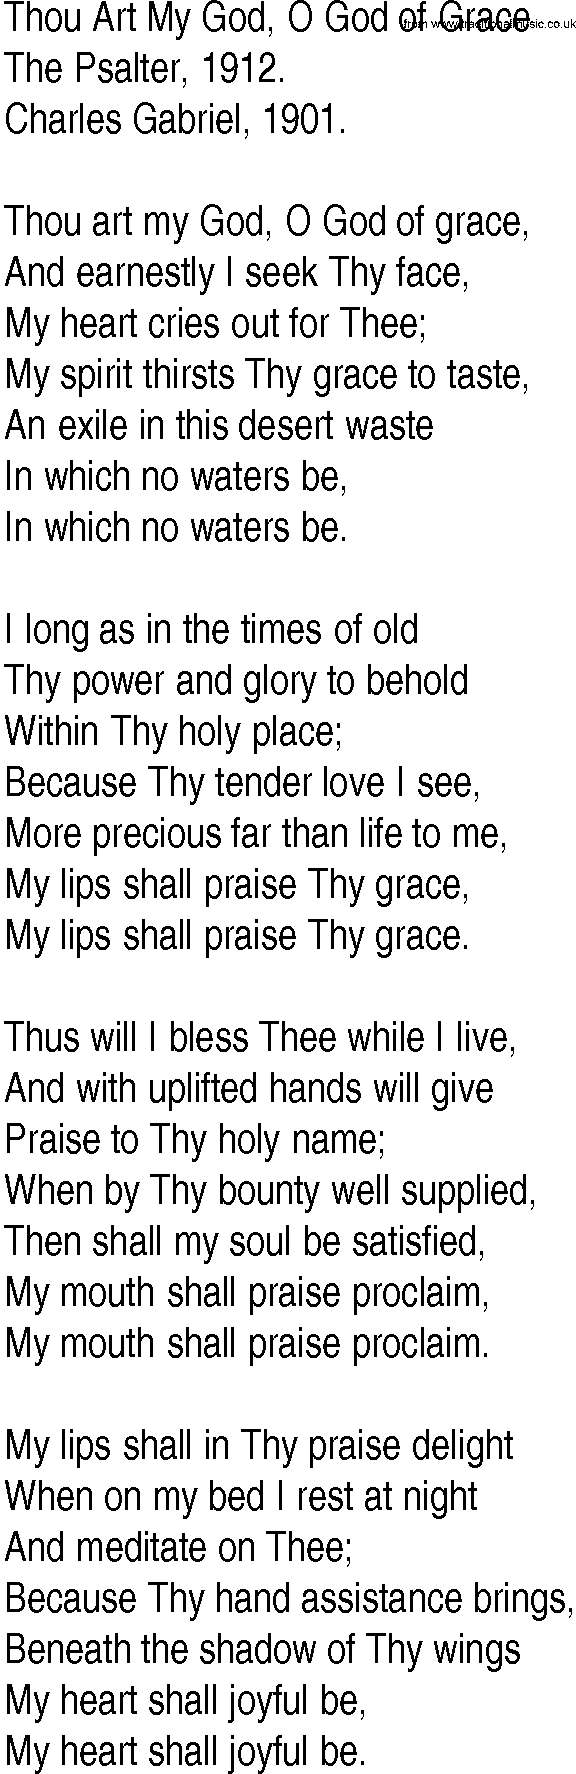 Hymn and Gospel Song: Thou Art My God, O God of Grace by The Psalter lyrics